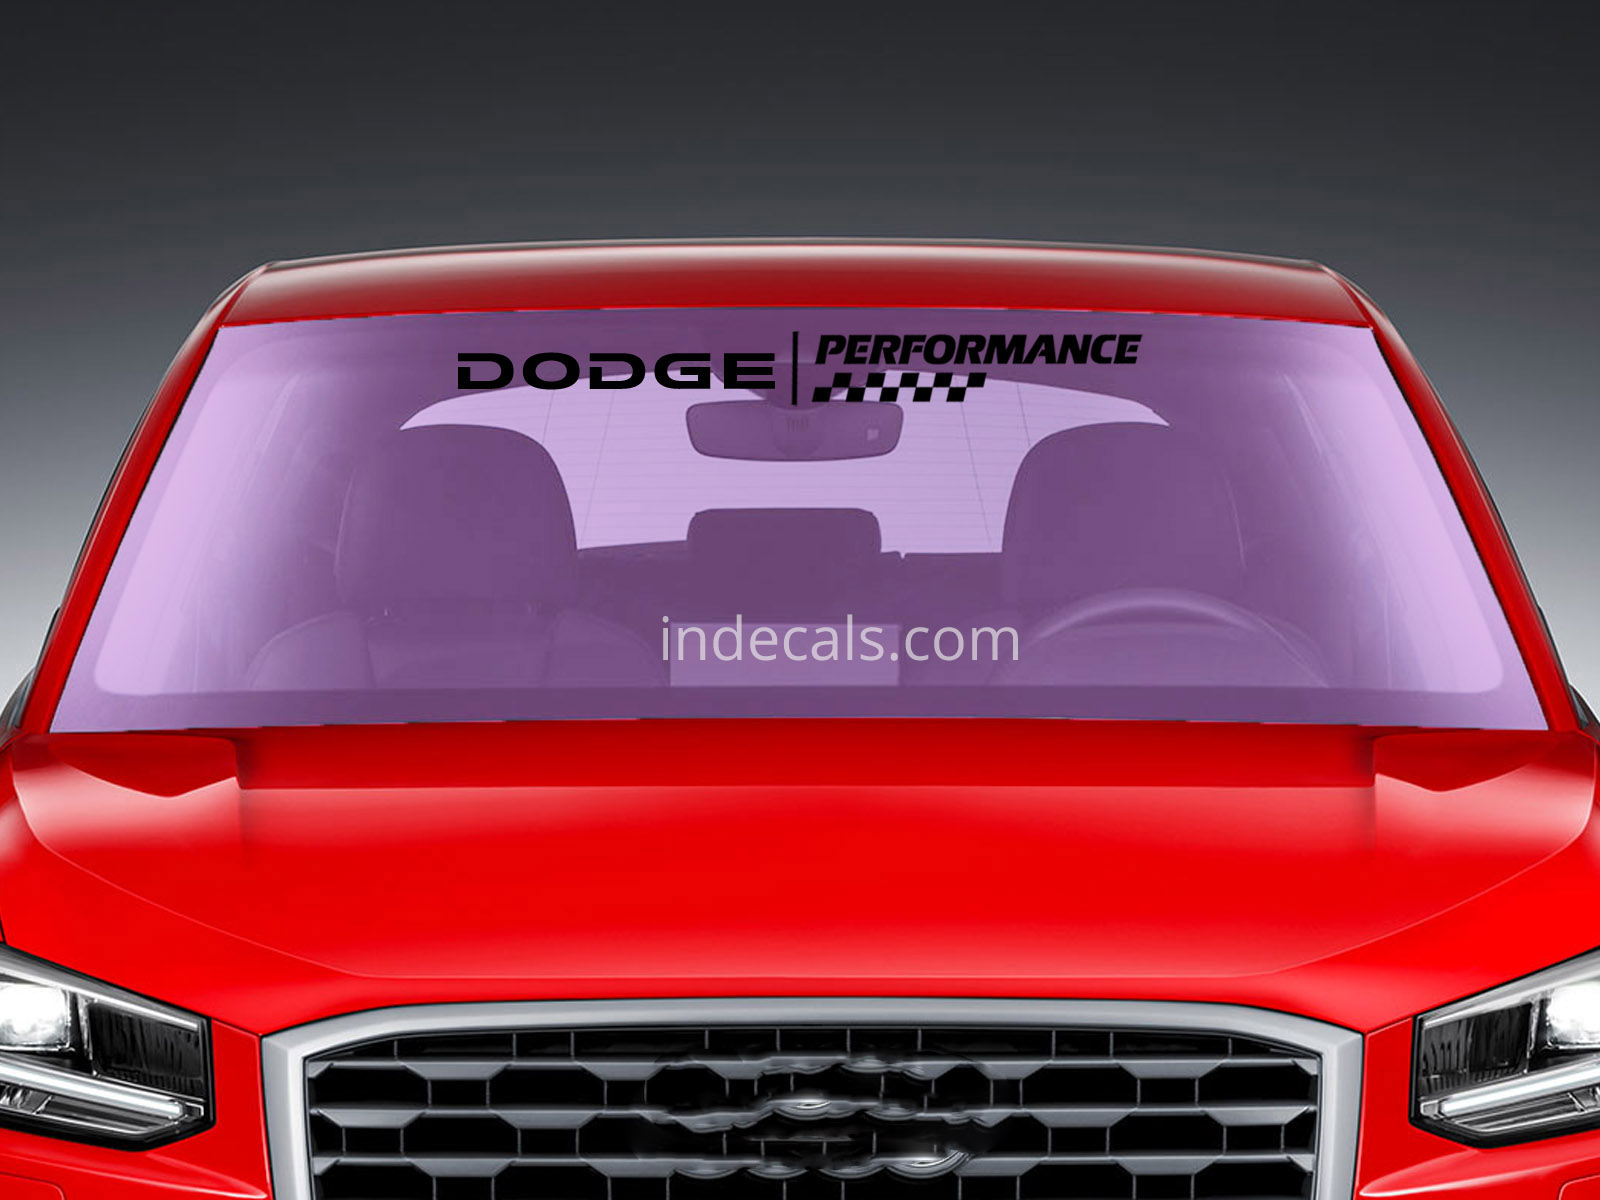 1 x Dodge Performance Sticker for Windshield or Back Window - Black